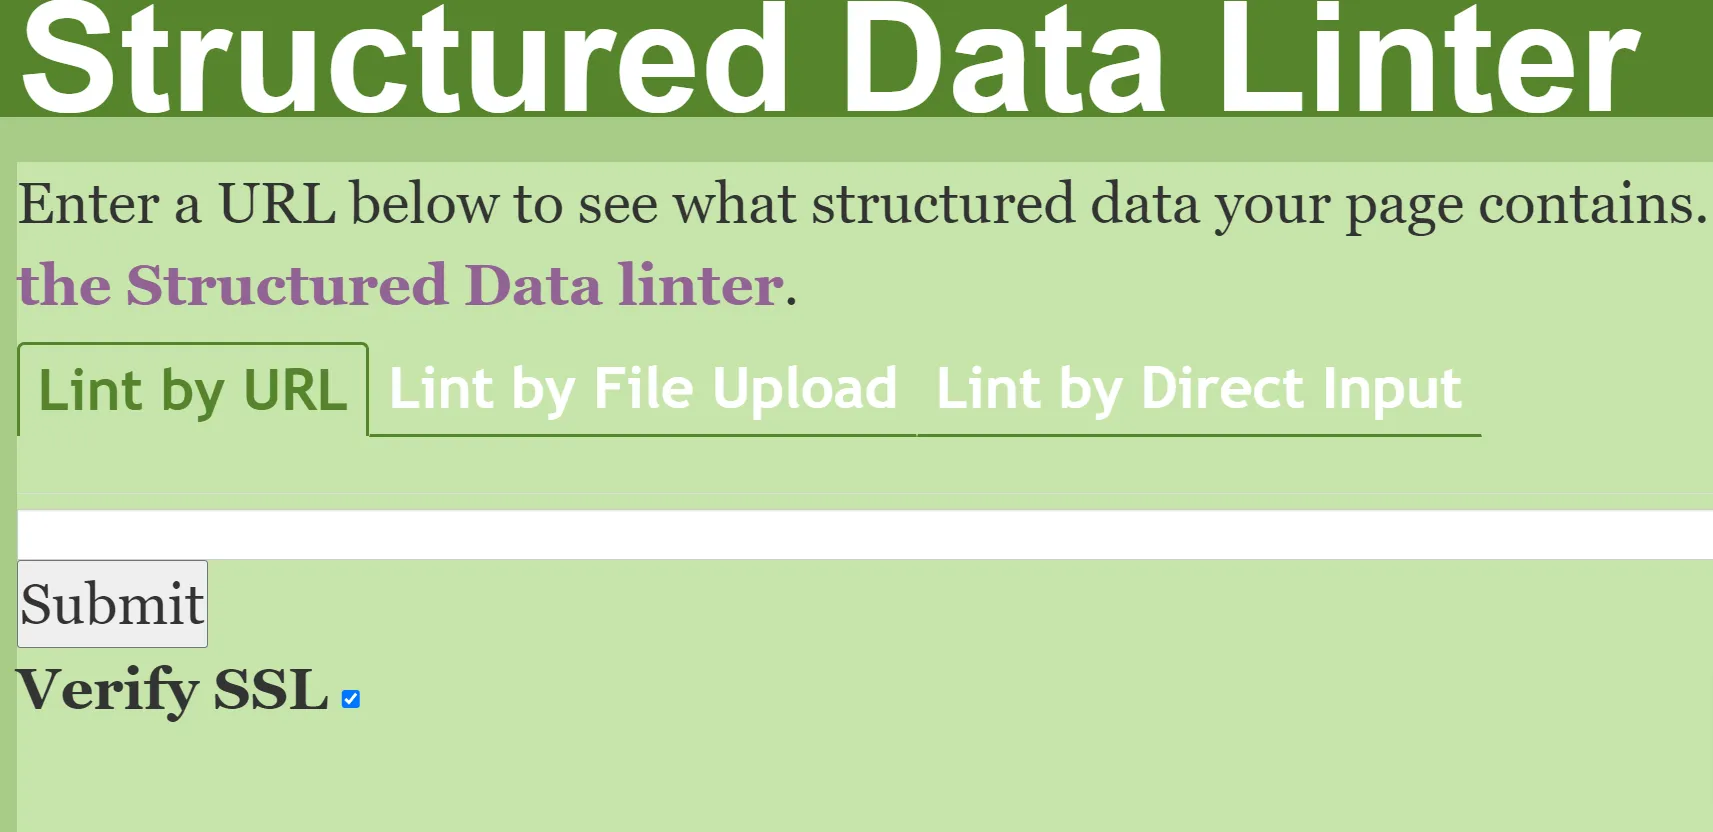 Structured-Data-Linter